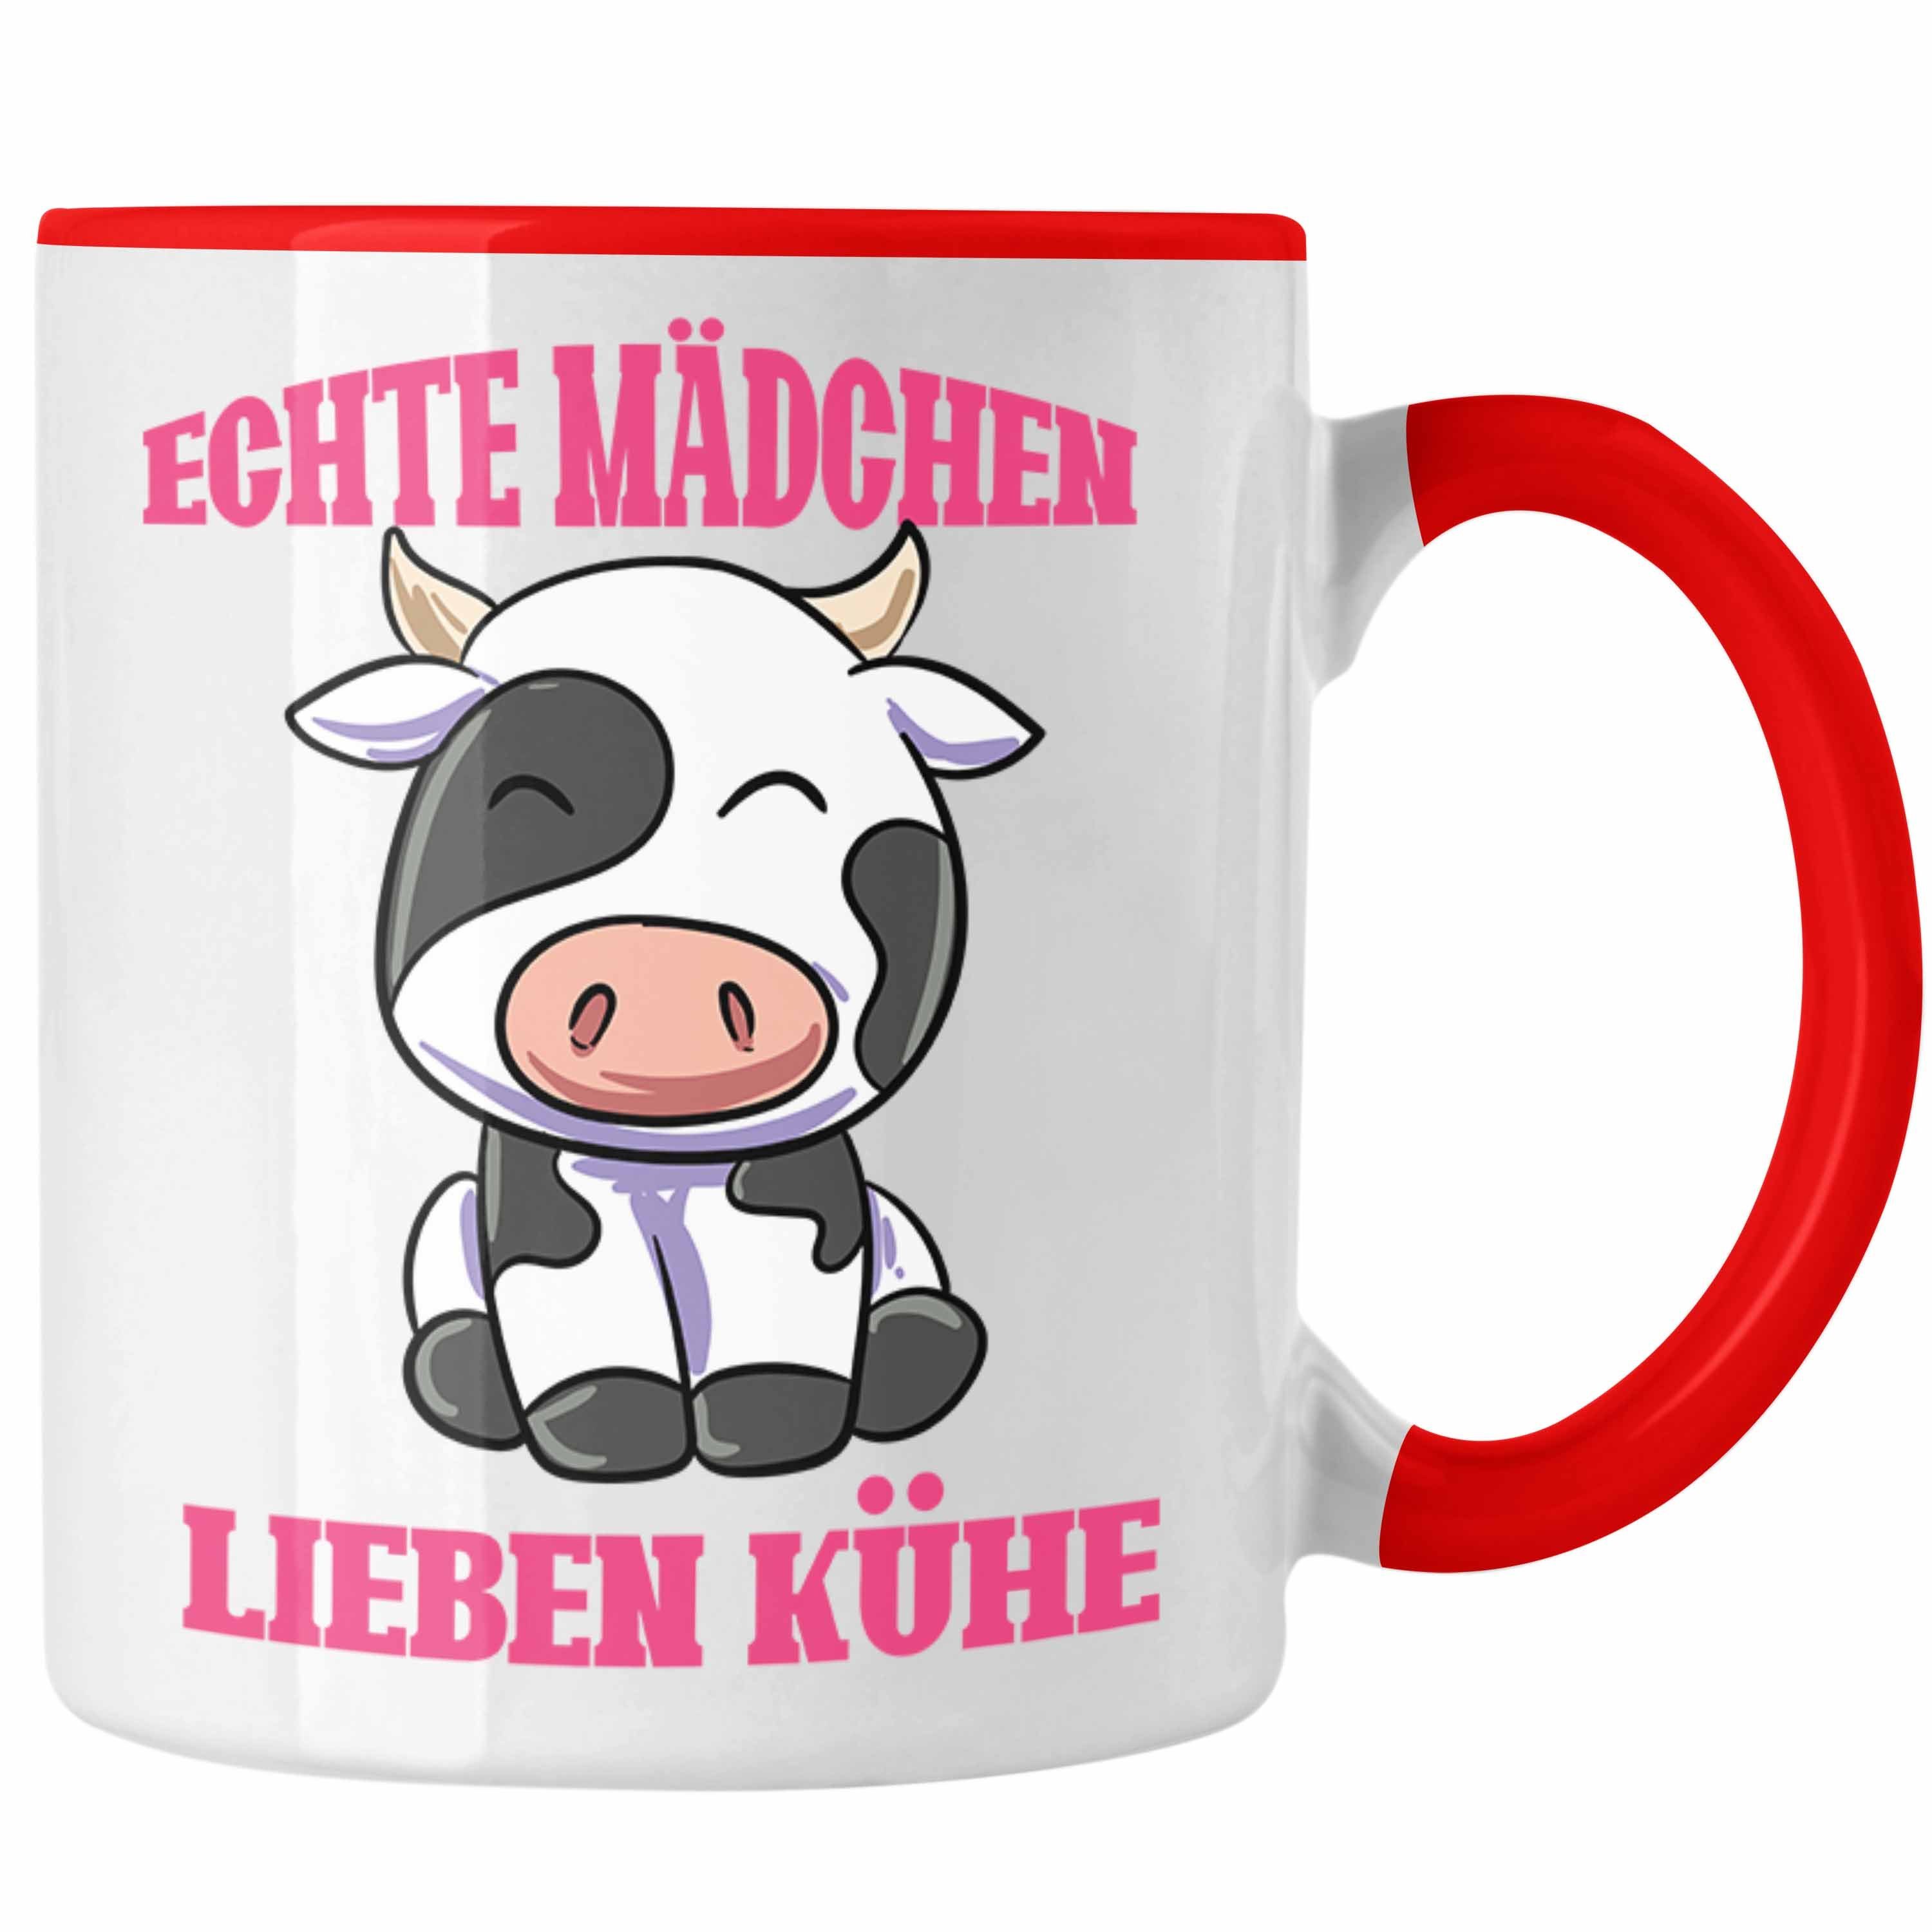 Kuh Lieben Geschenk Kühe Tasse Gesch Echte Bäuerin Rot Tasse Landwirtin Trendation Mädchen